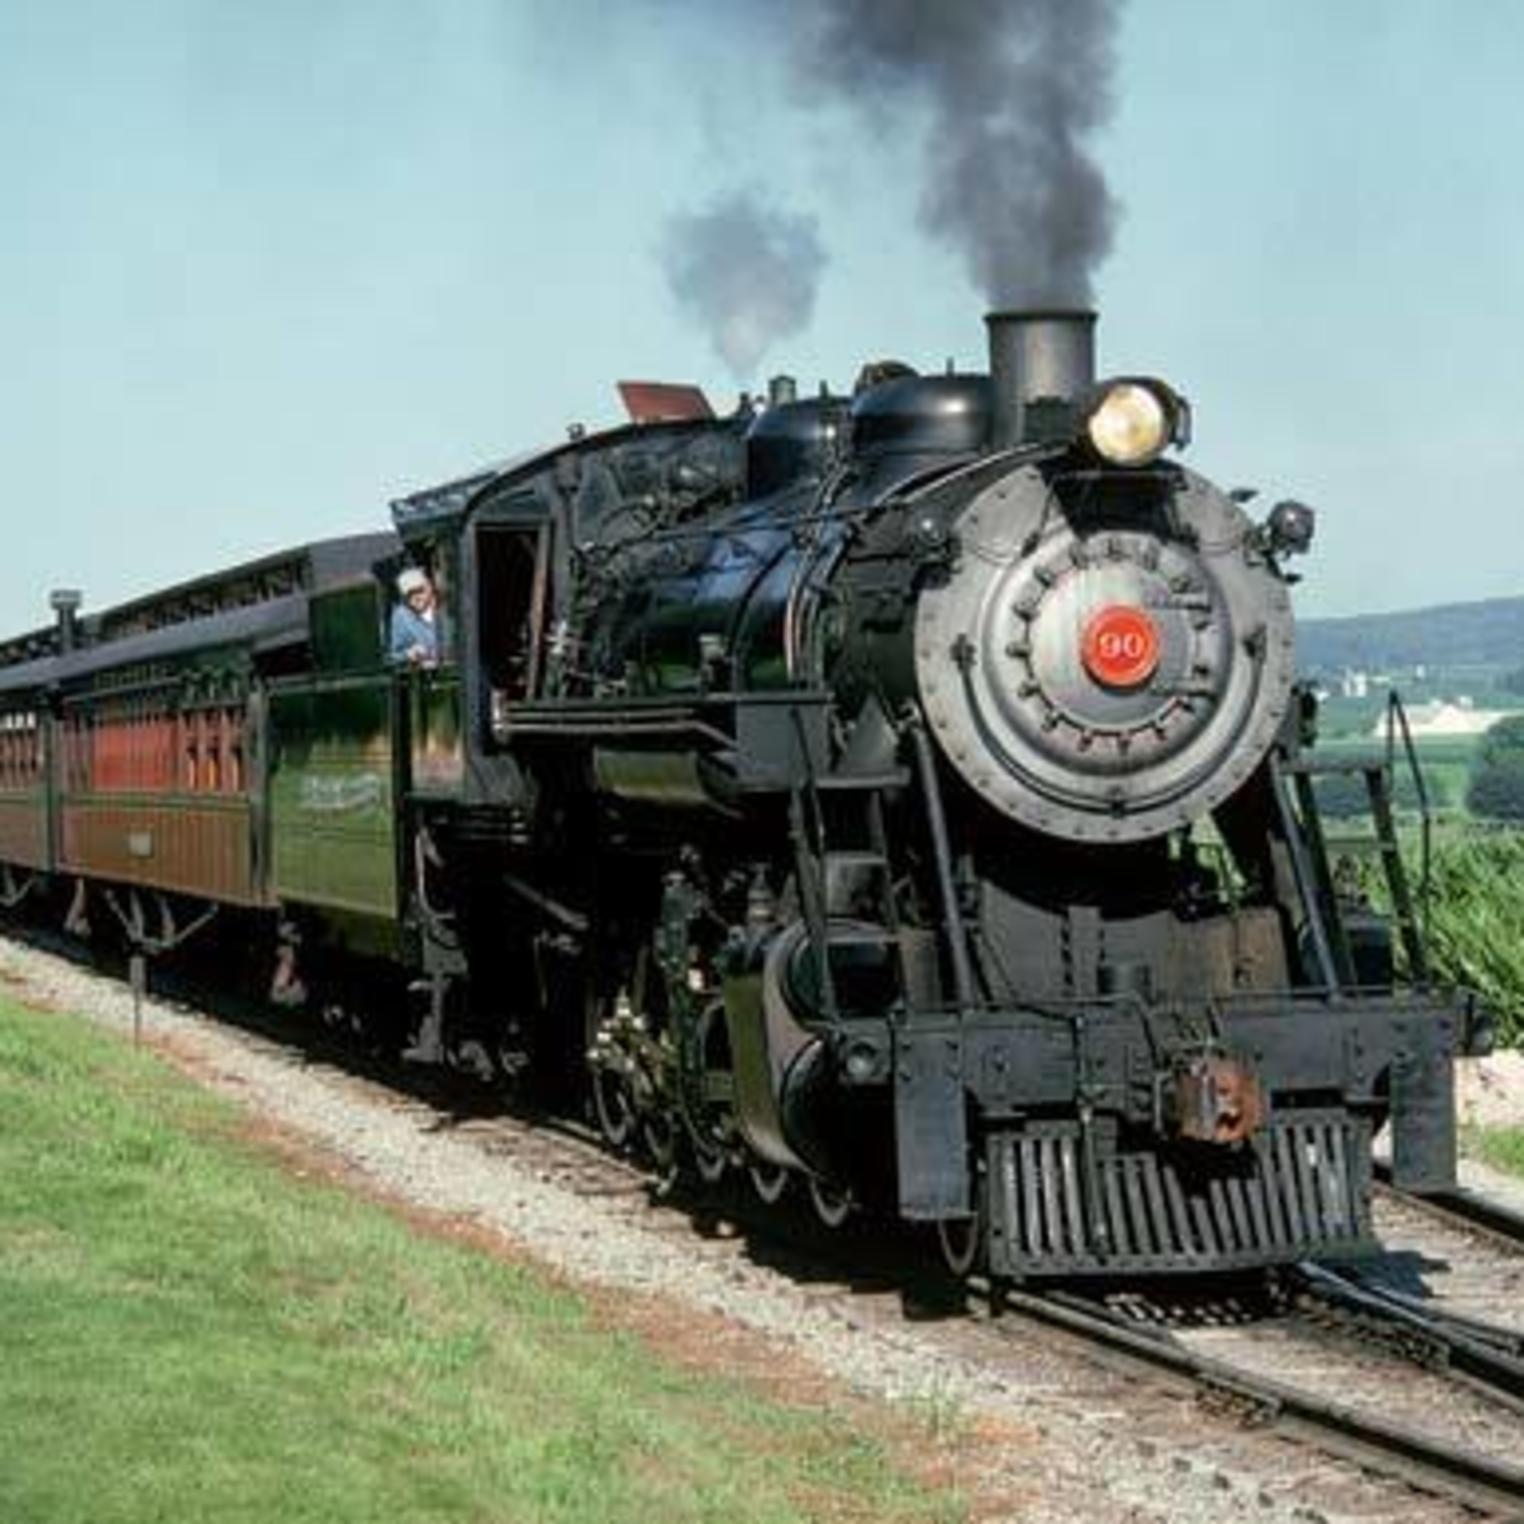 The Strasburg Railroad